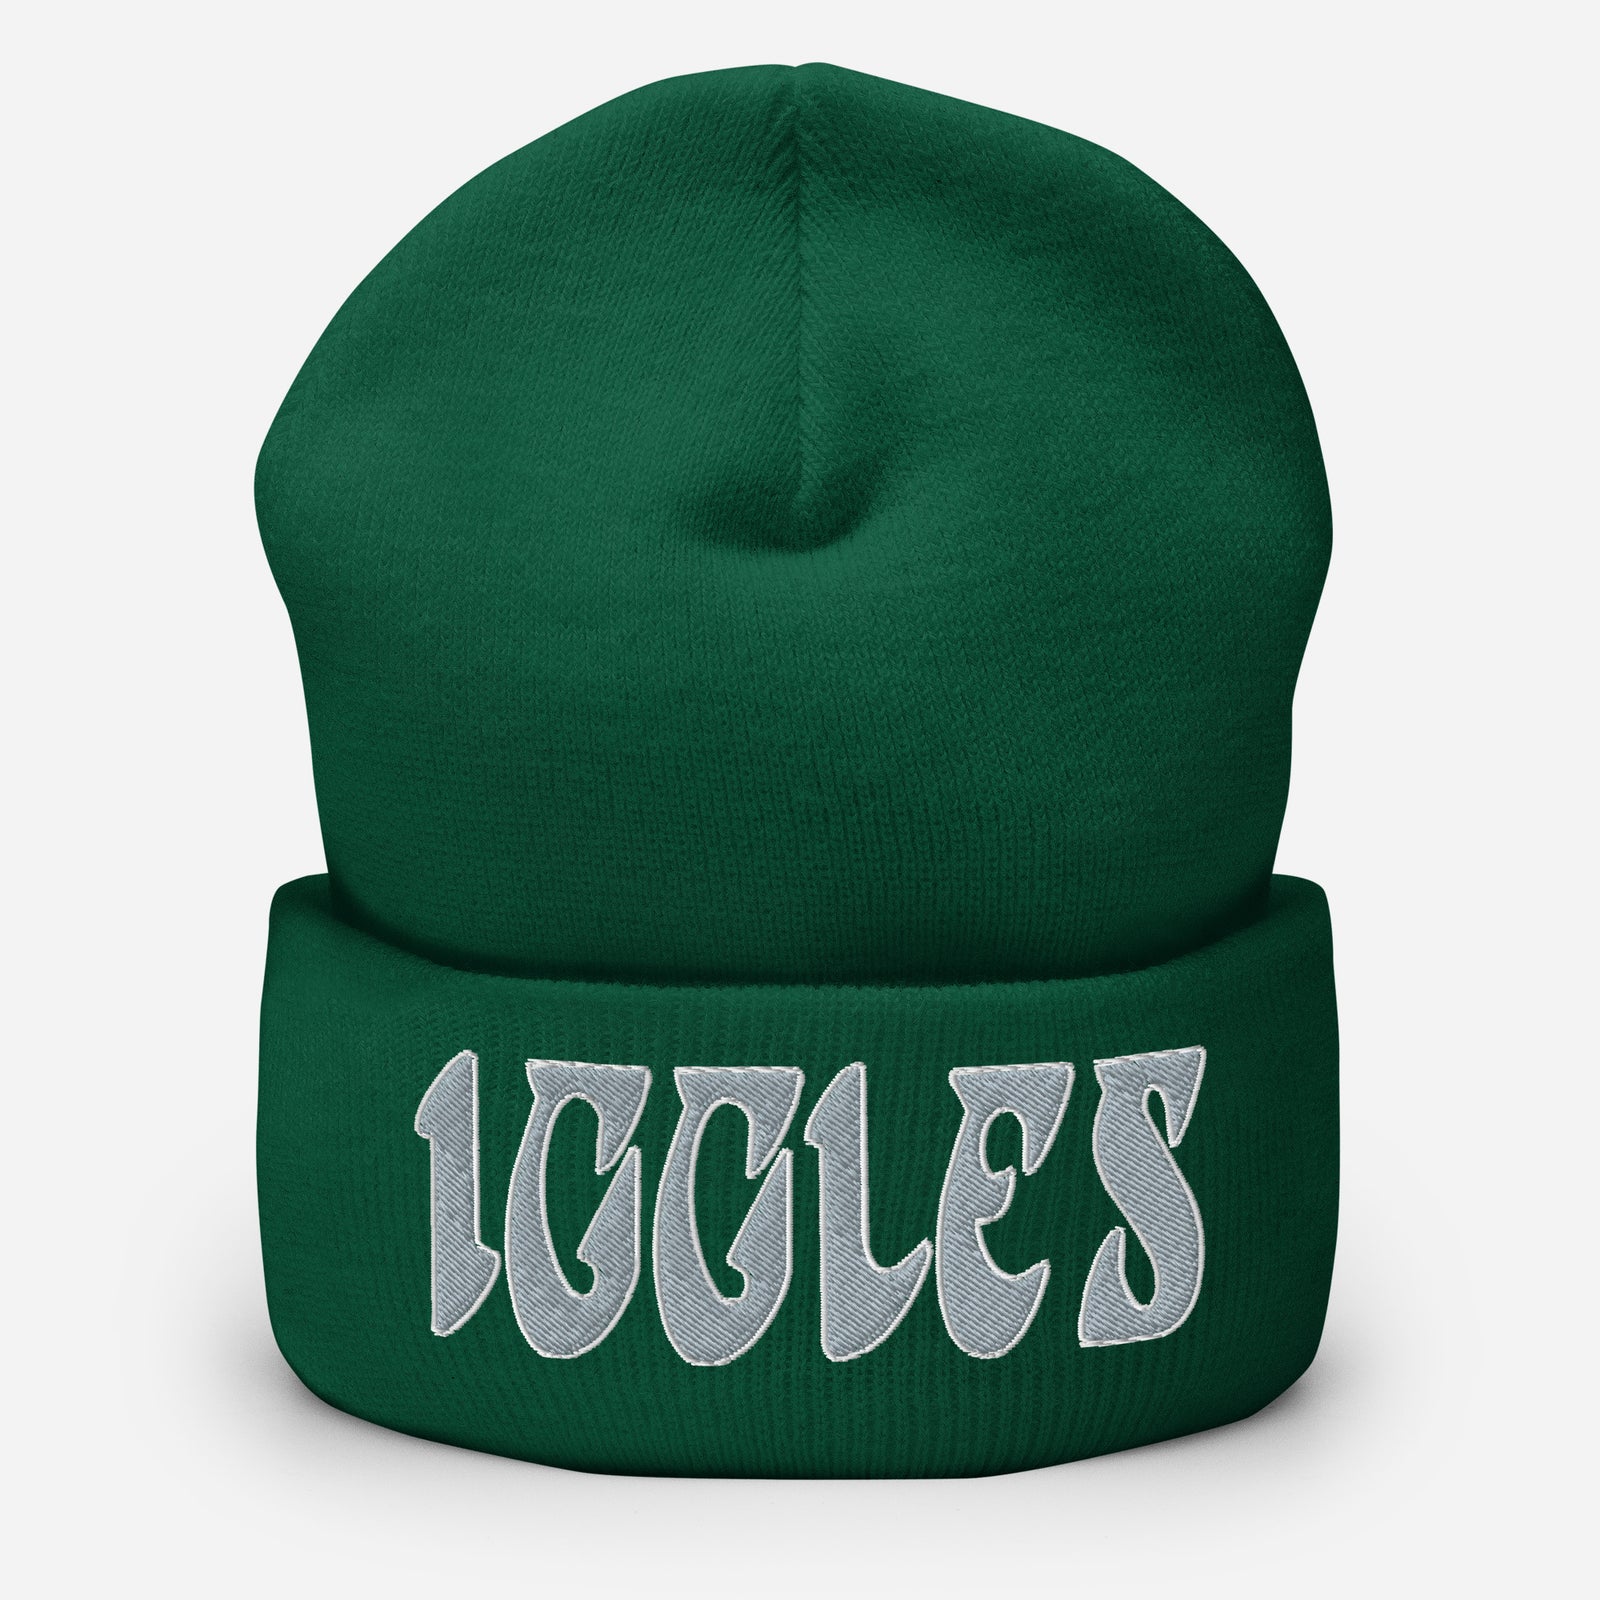 "Iggles" Knit Hat